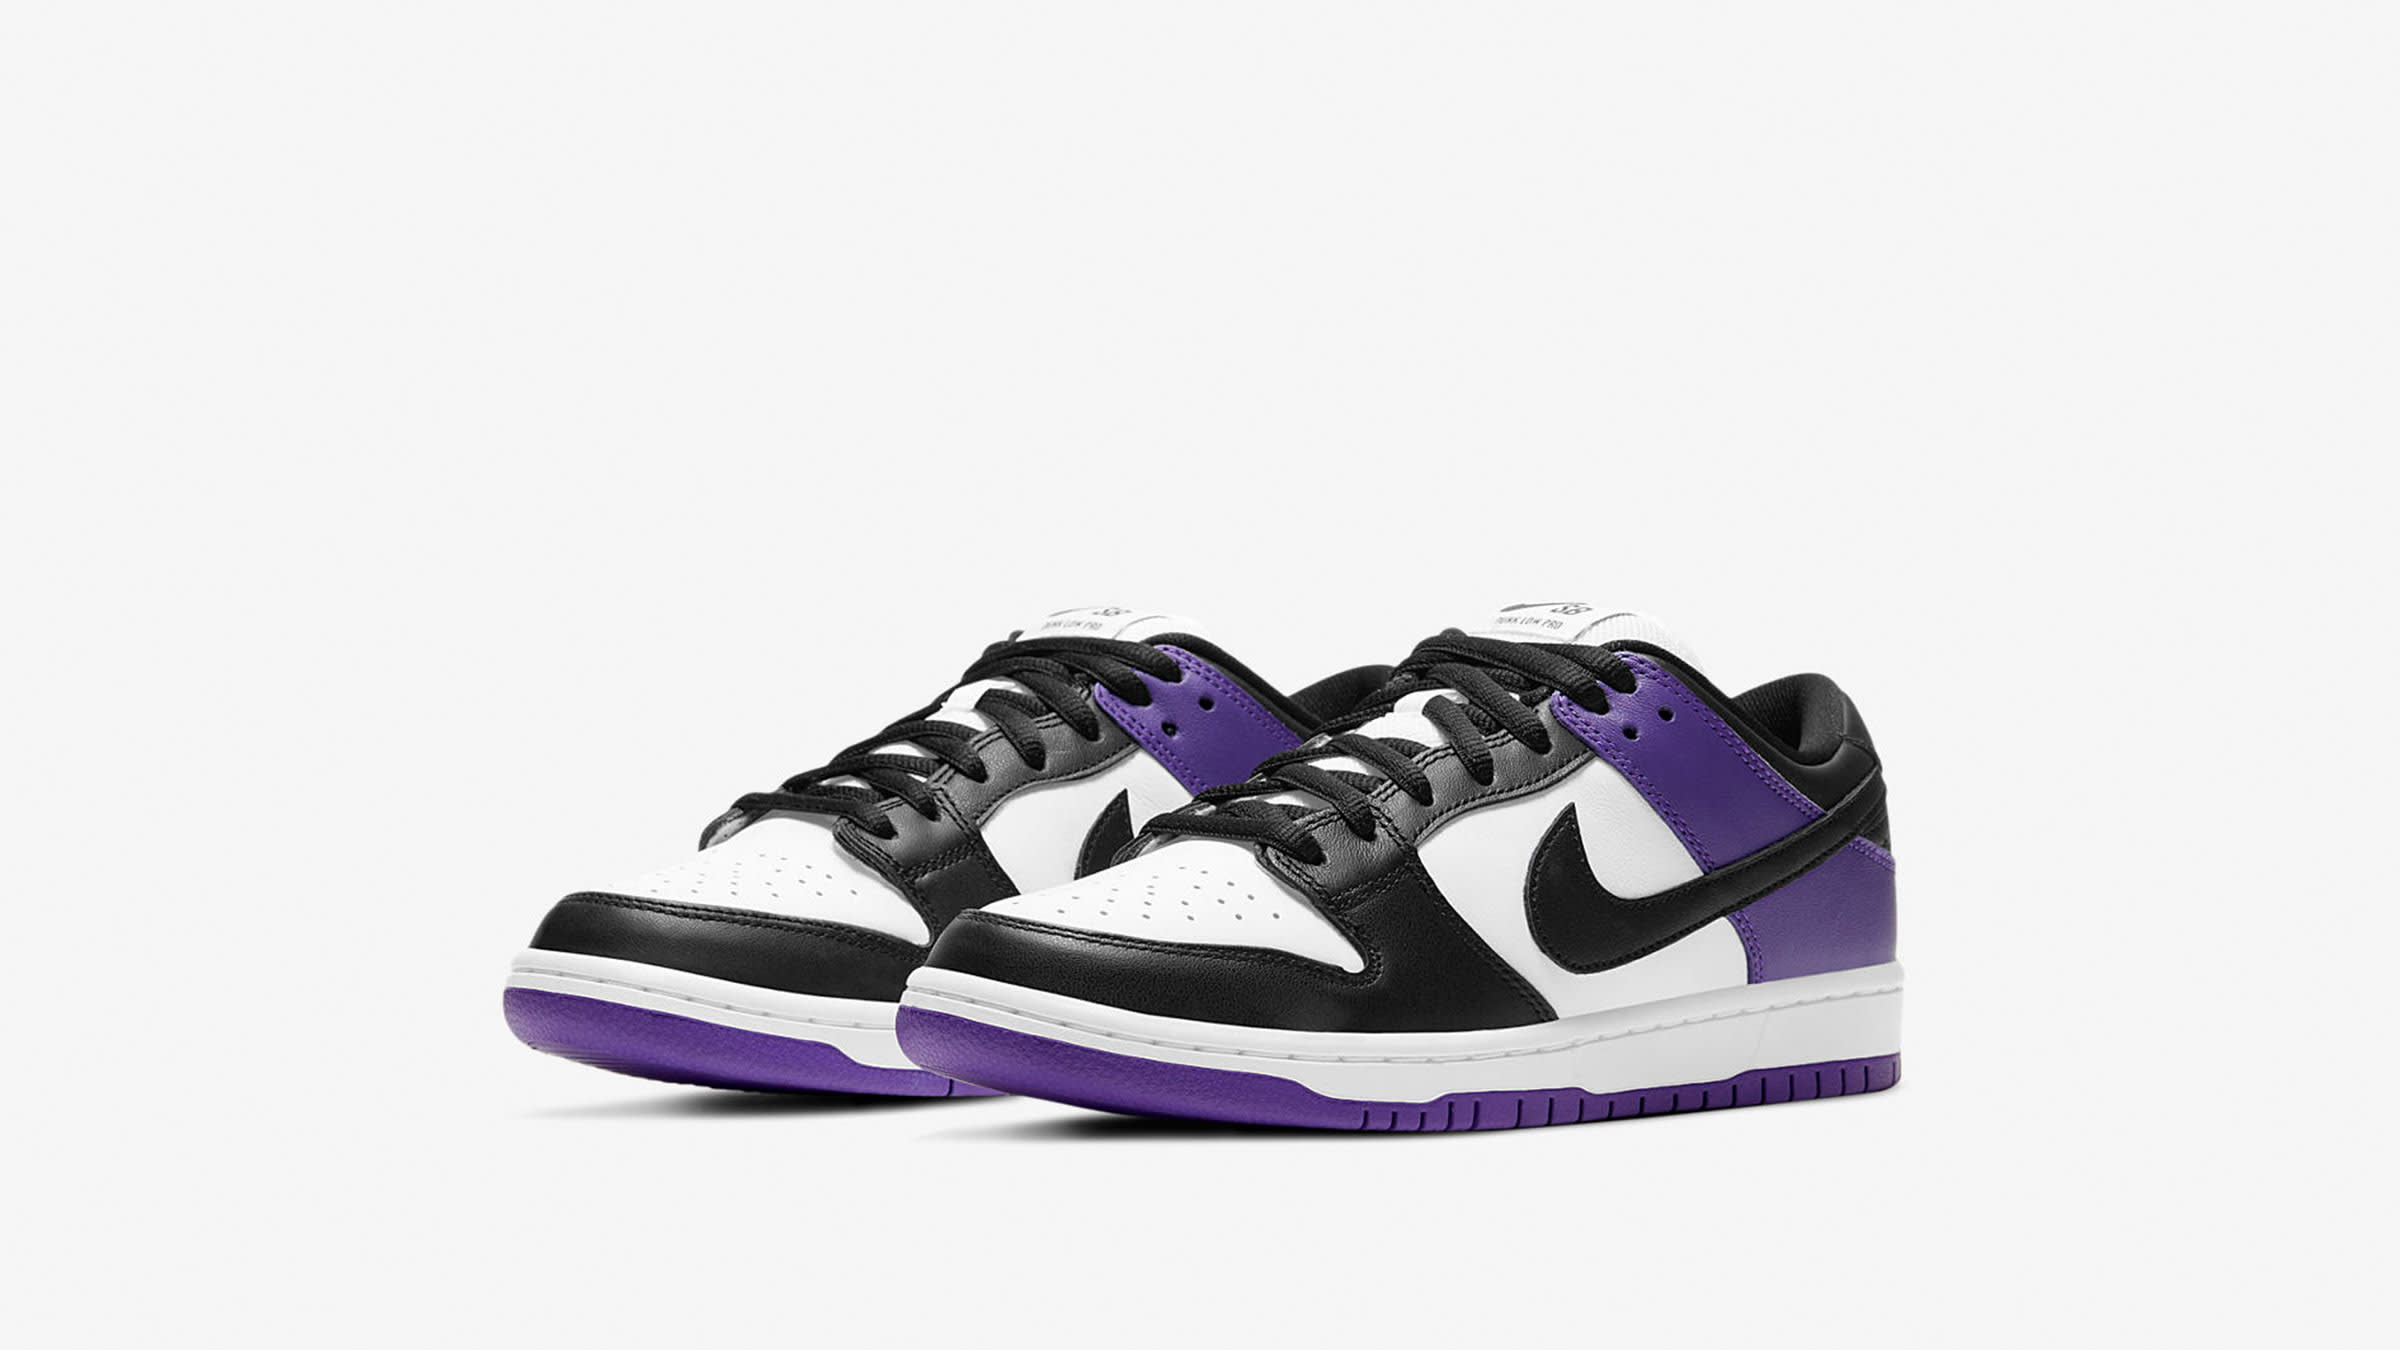 Nike SB Dunk Low Pro (Purple, Black & White) | END. Launches